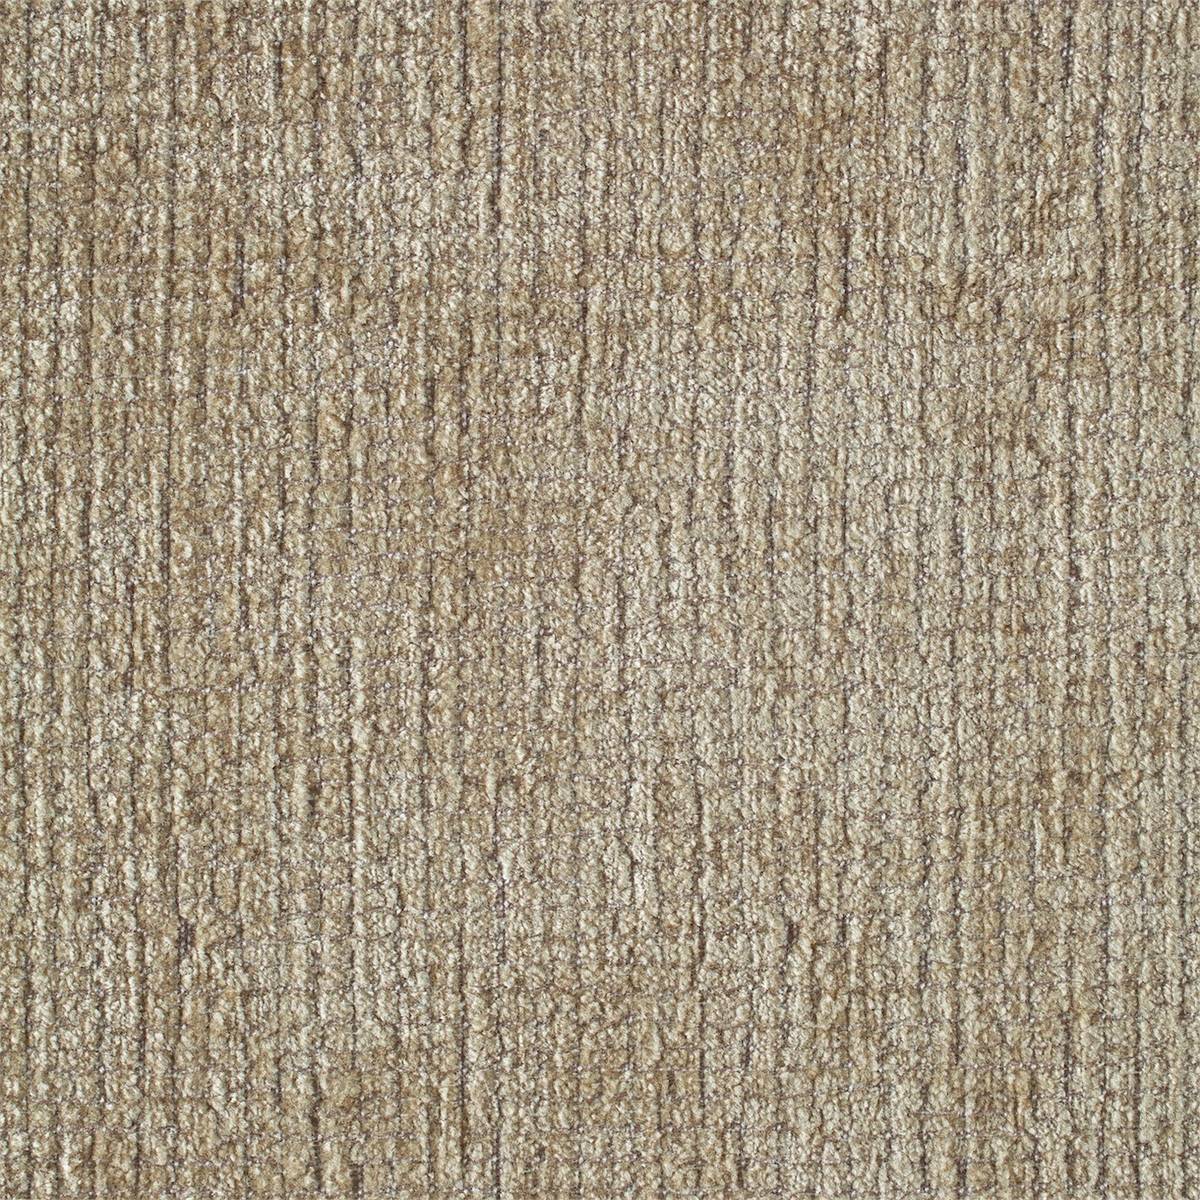 Tessella Sand Fabric by Sanderson